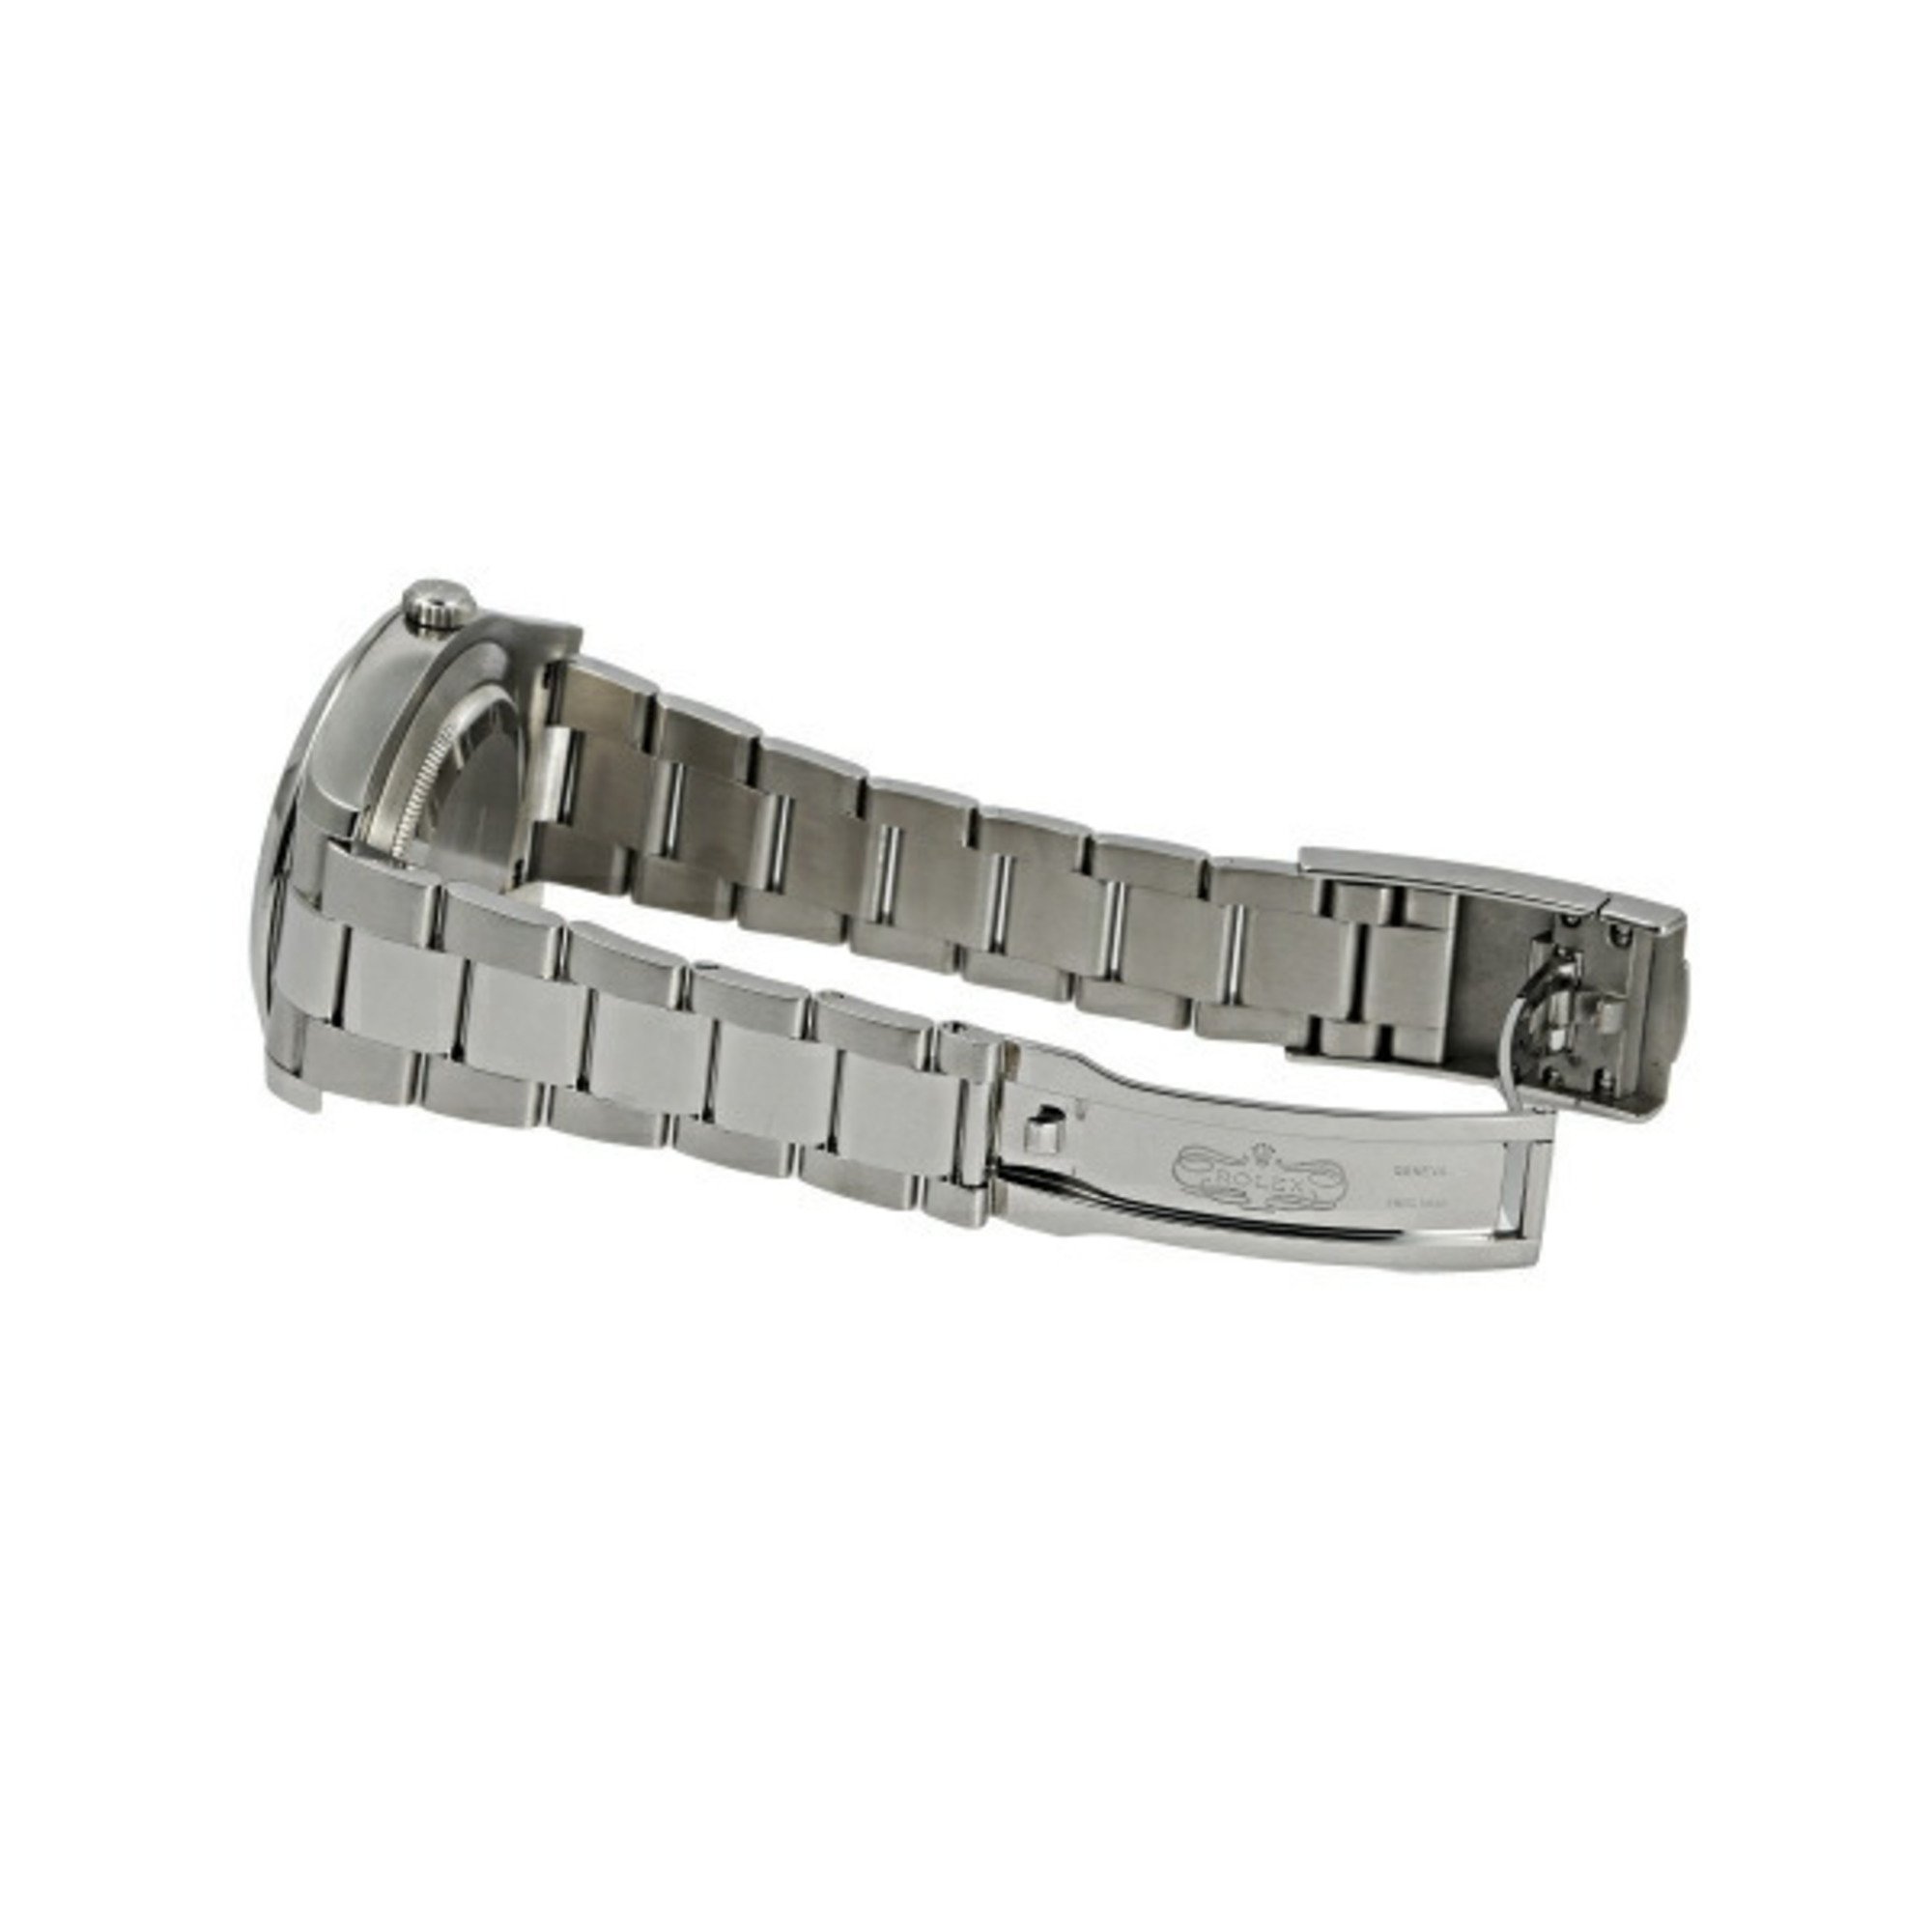 Rolex Datejust II 116300 Black/Bar Dial Watch Men's